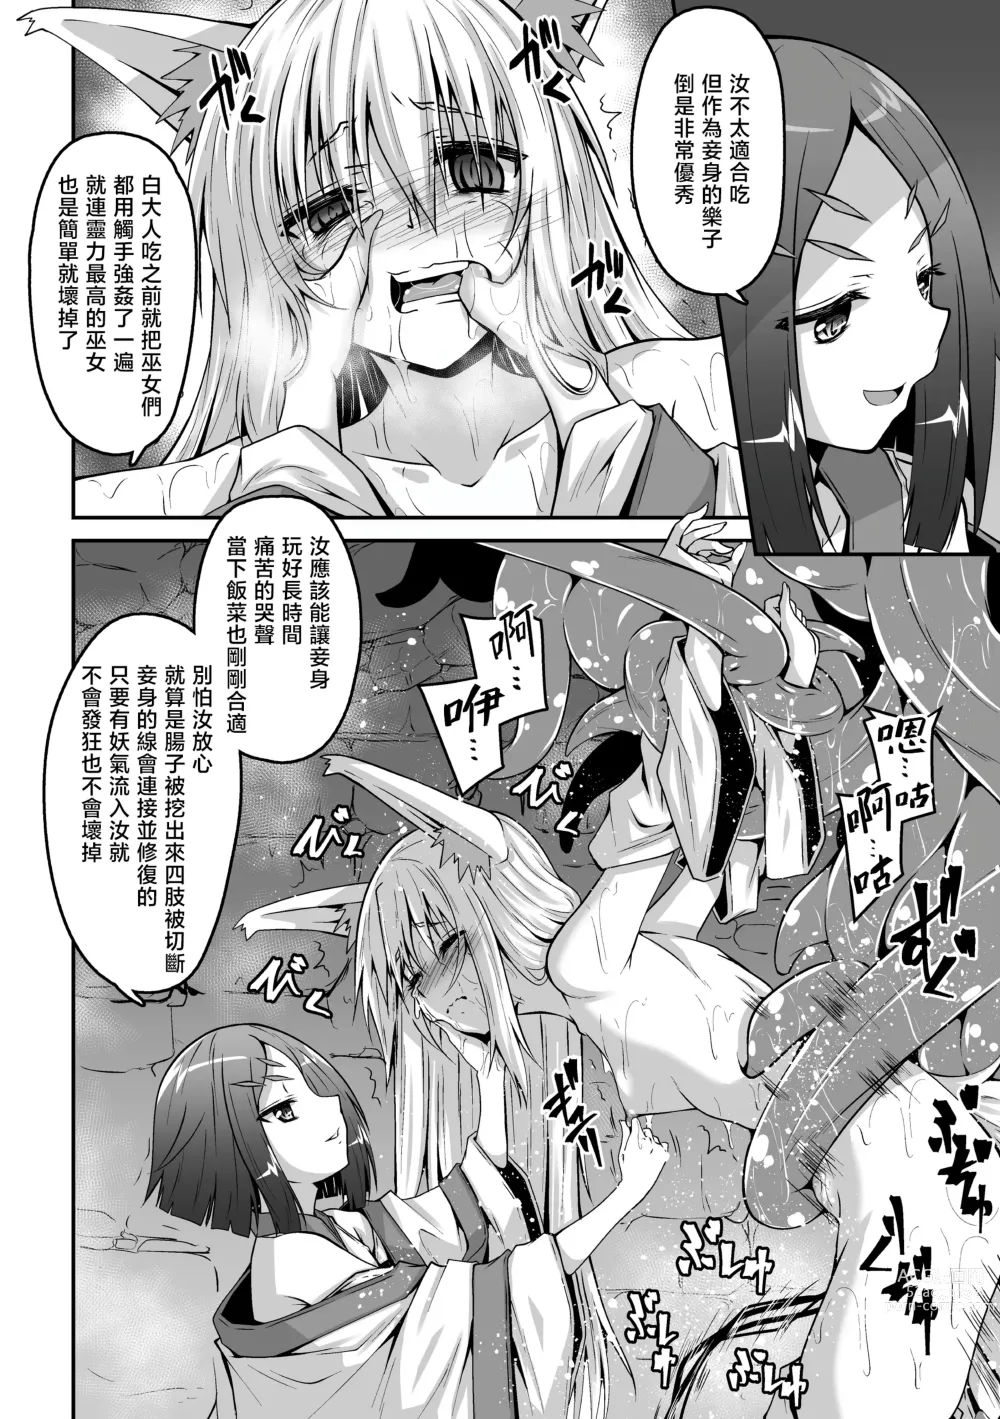 Page 23 of manga Youko Inmon Kitan 5